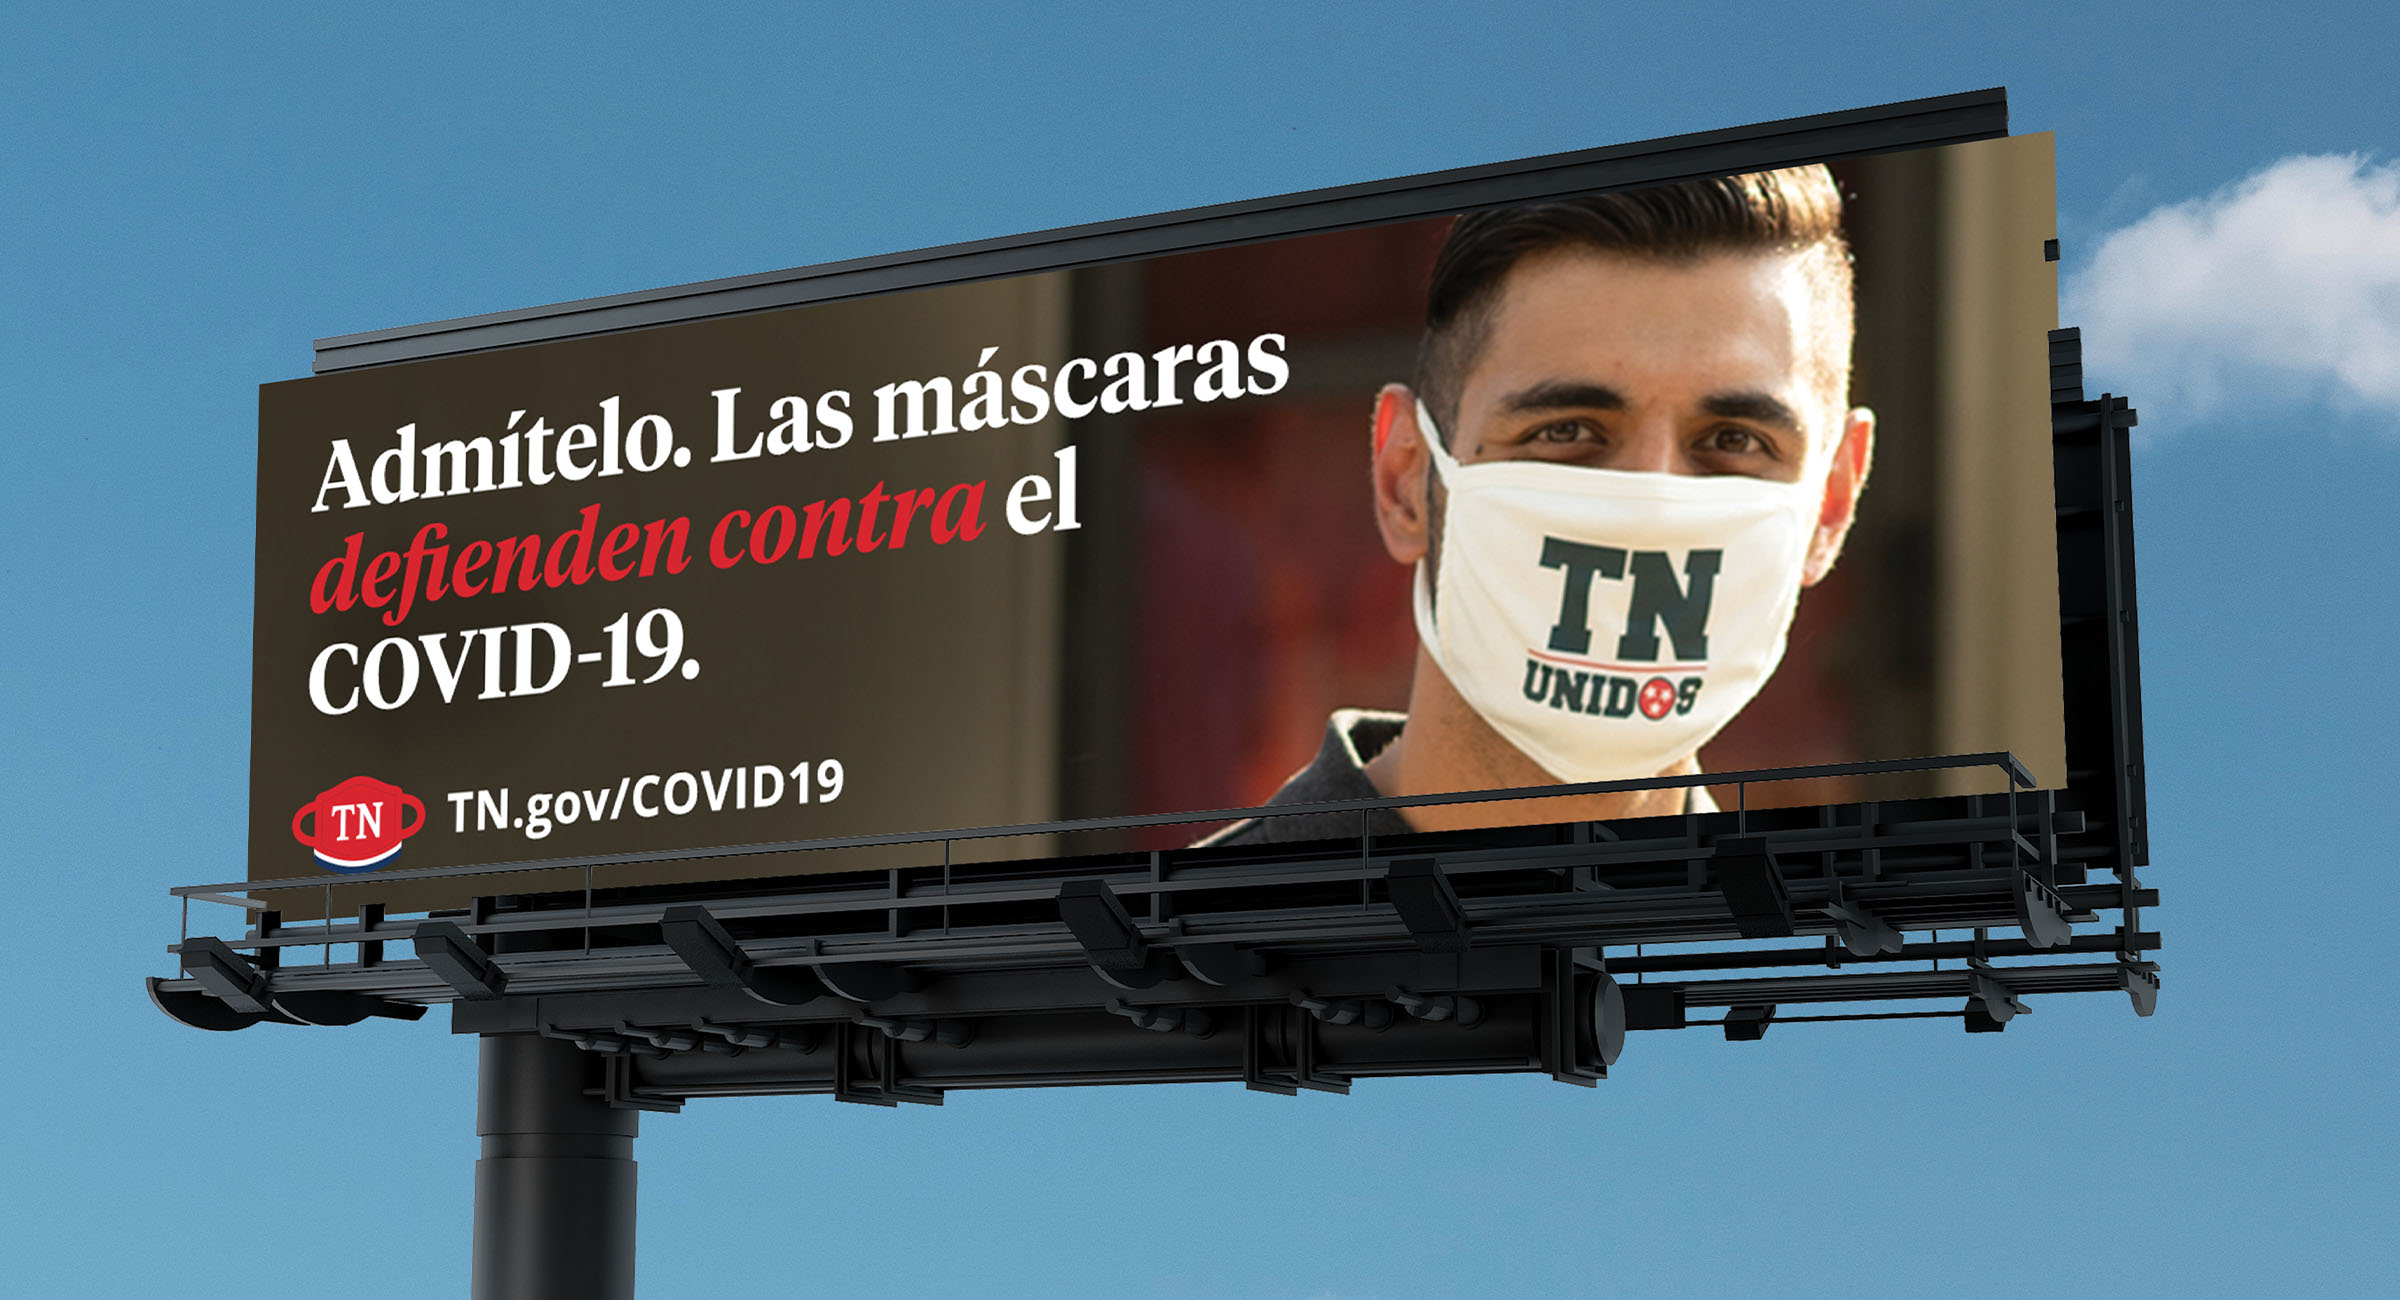 billboard in spanish COVID-19 PSA